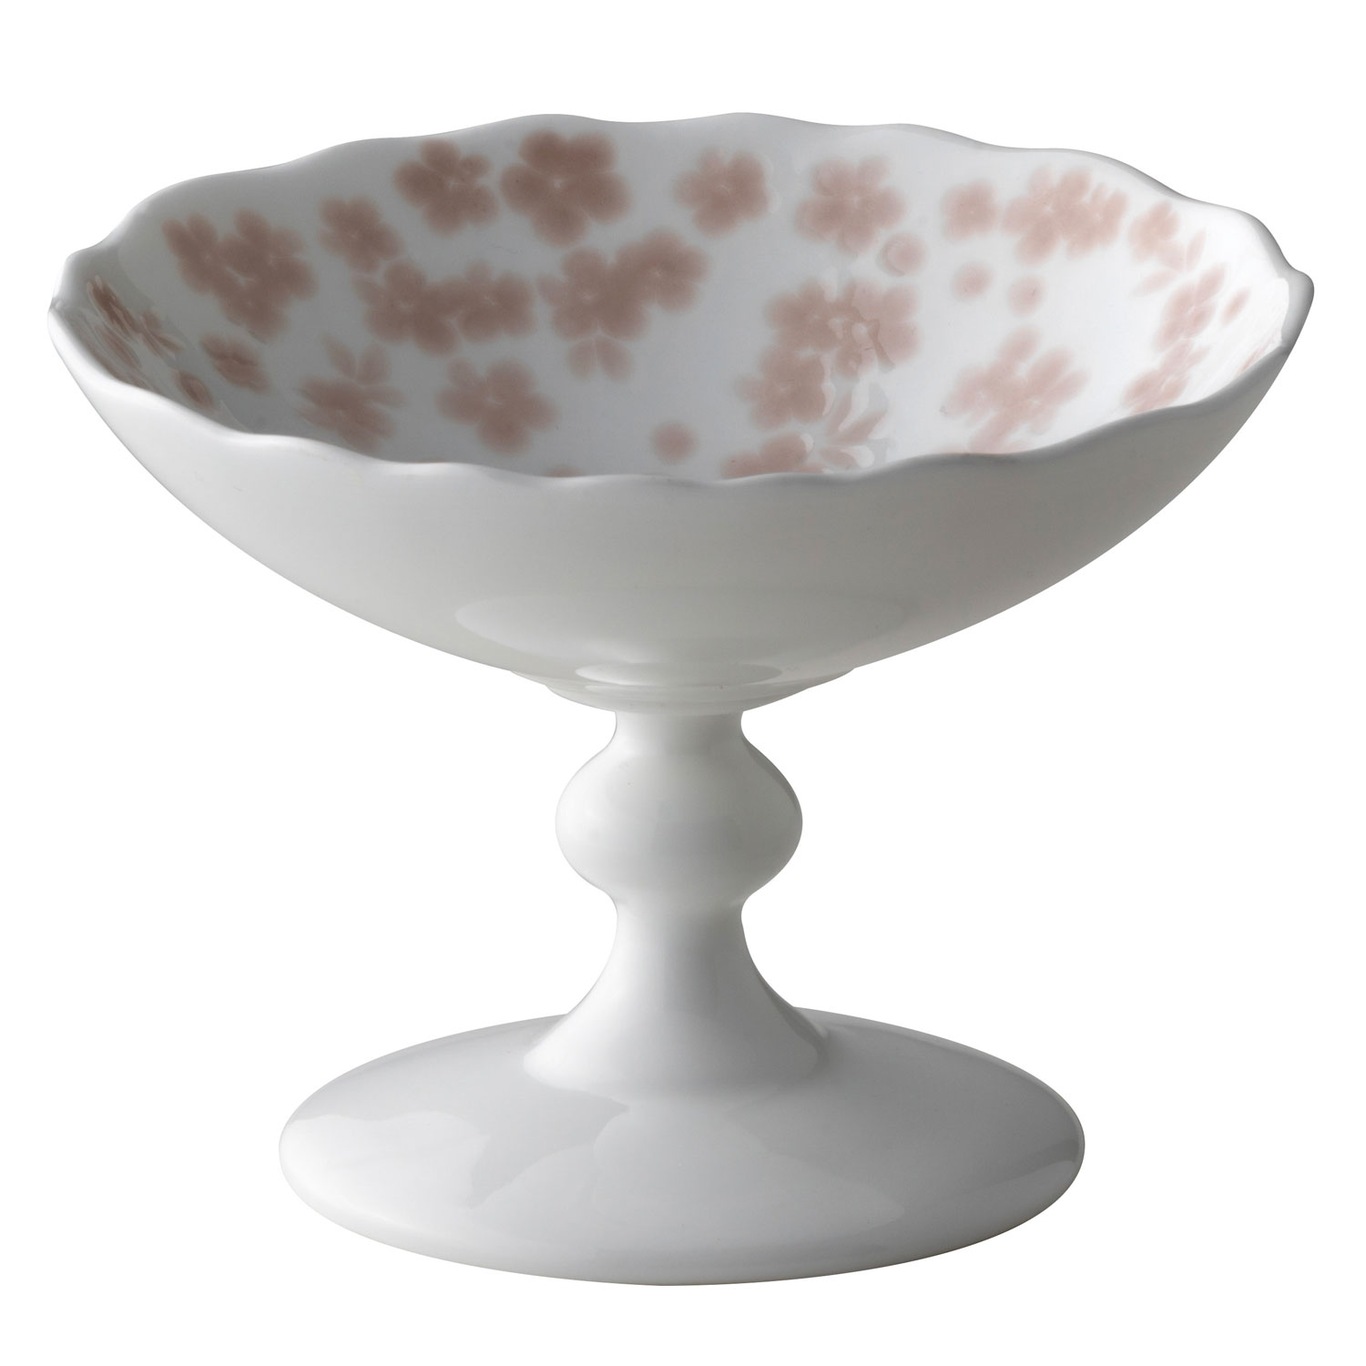 Slåpeblom Bowl With Foot 12 cm, Pink